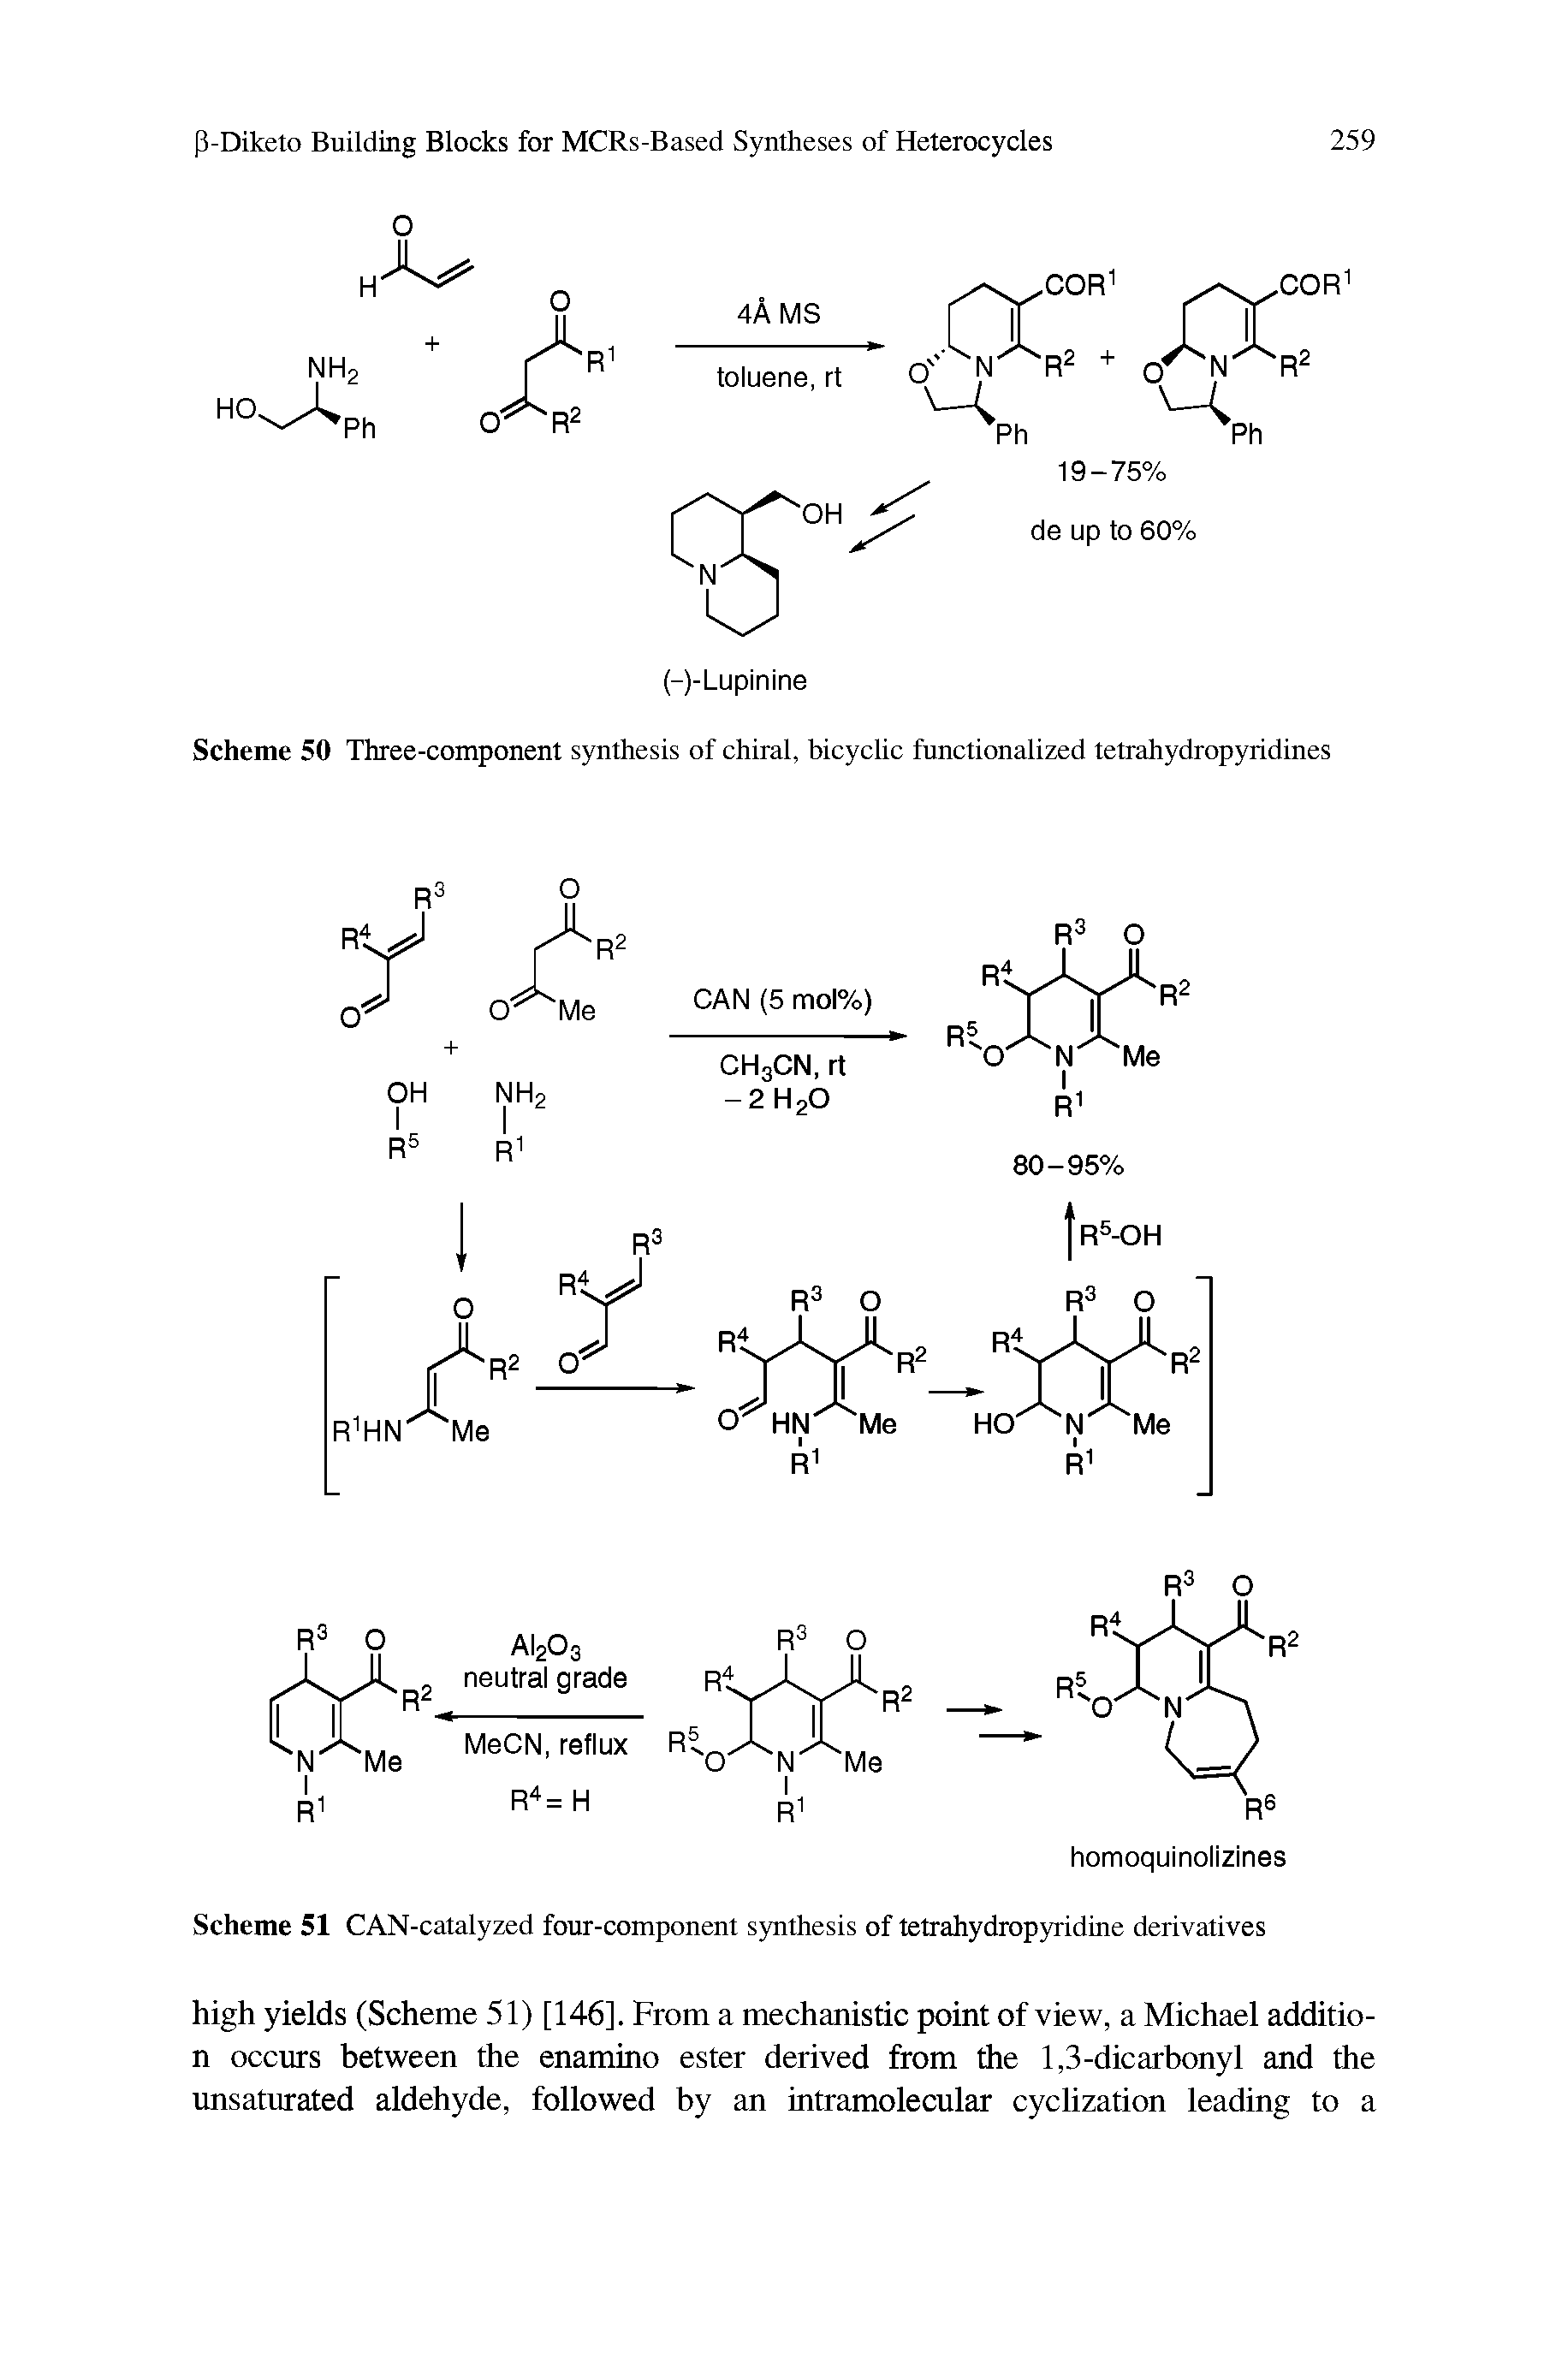 Scheme 51 CAN-catalyzed four-component synthesis of tetrahydropyridine derivatives...